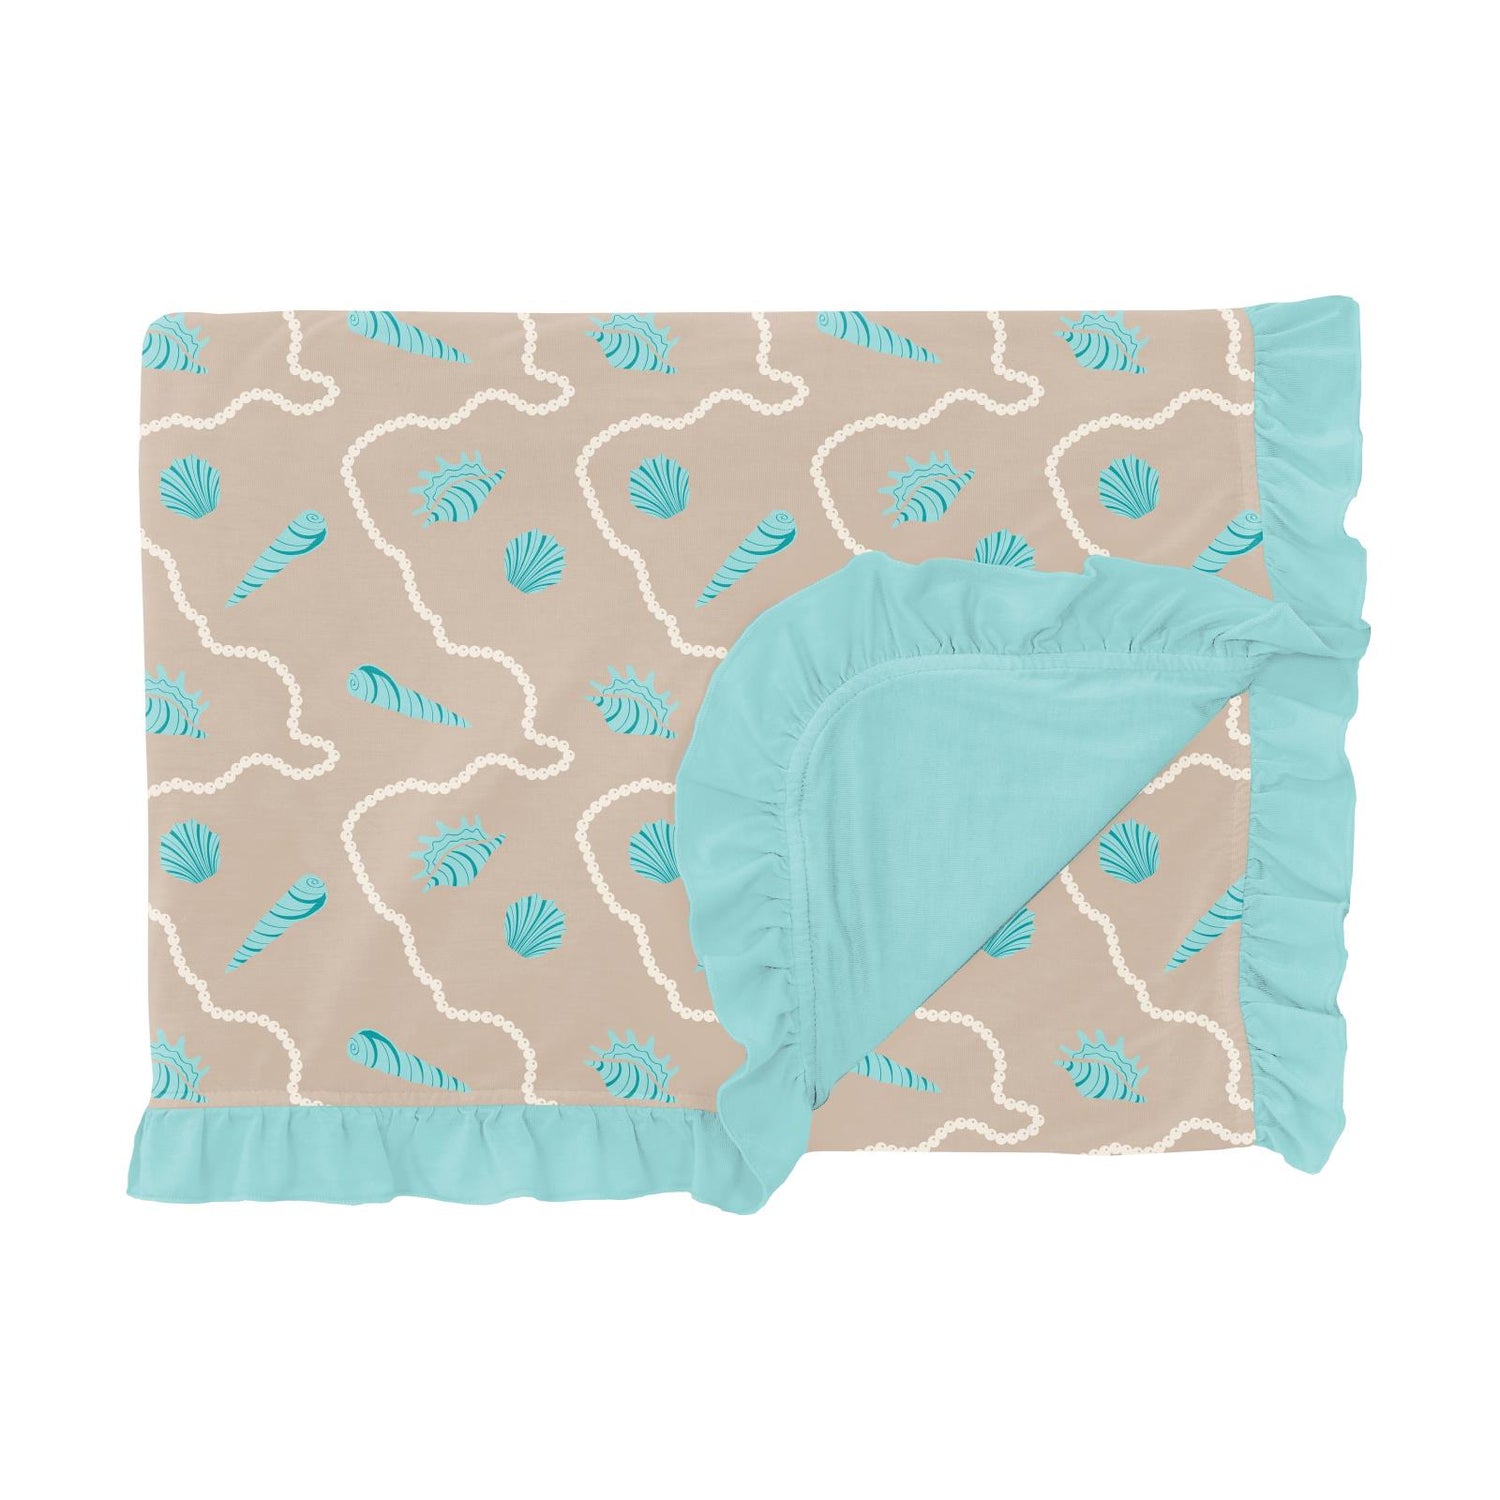 Print Ruffle Toddler Blanket in Burlap Shells